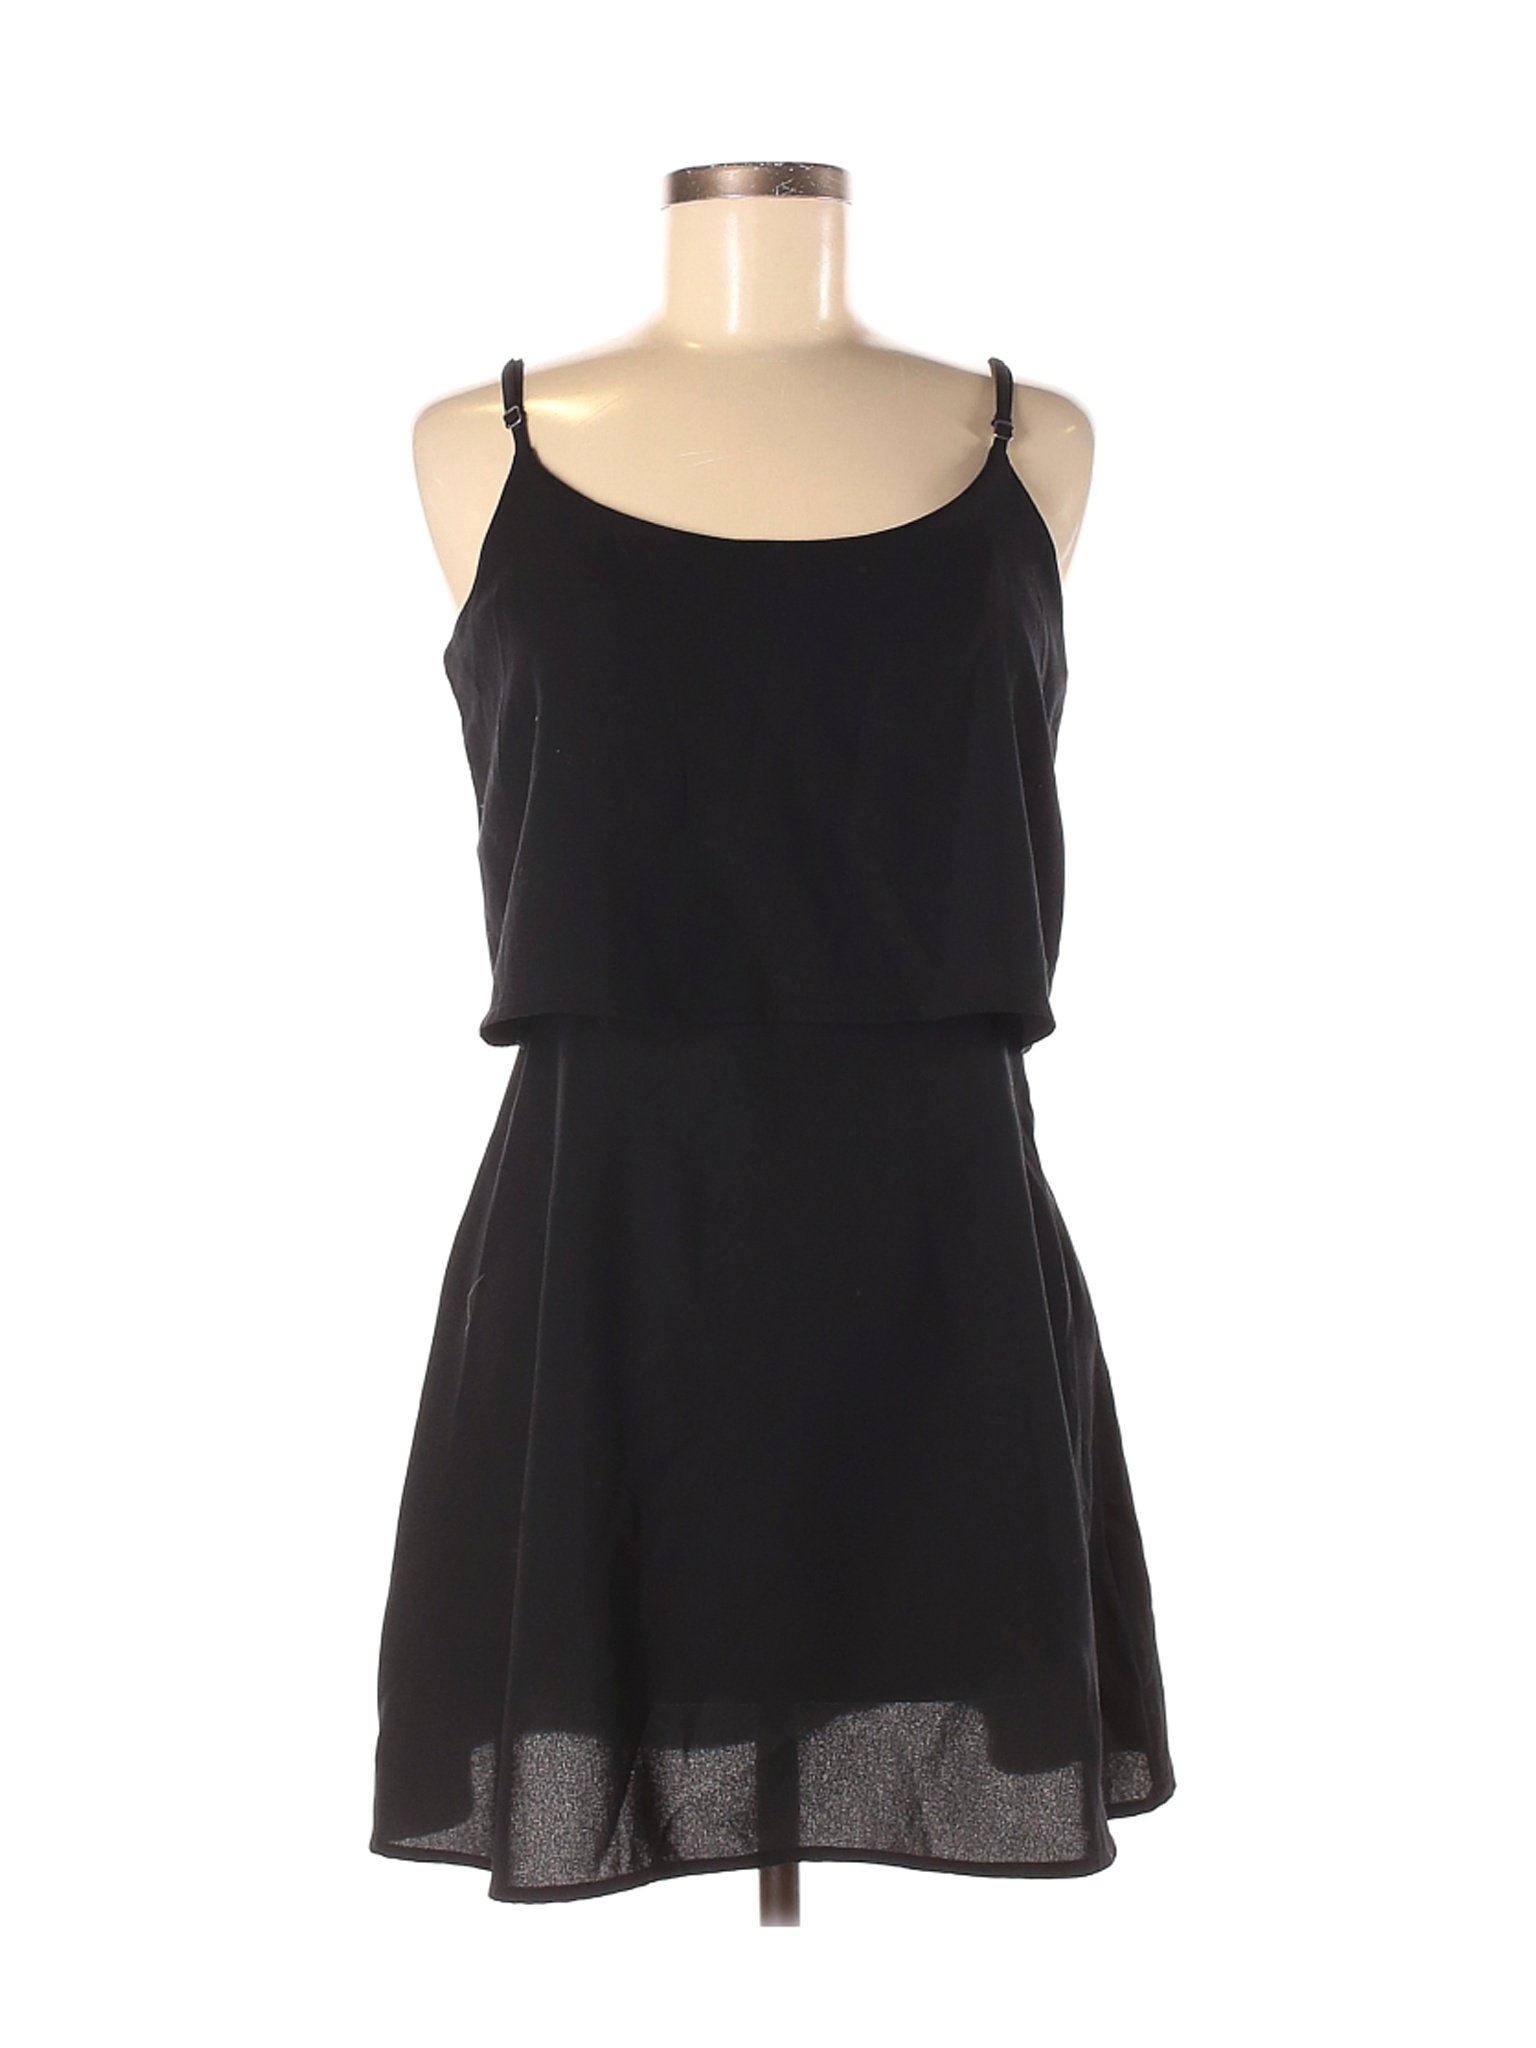 Abercrombie & Fitch Women Black Casual Dress M | eBay